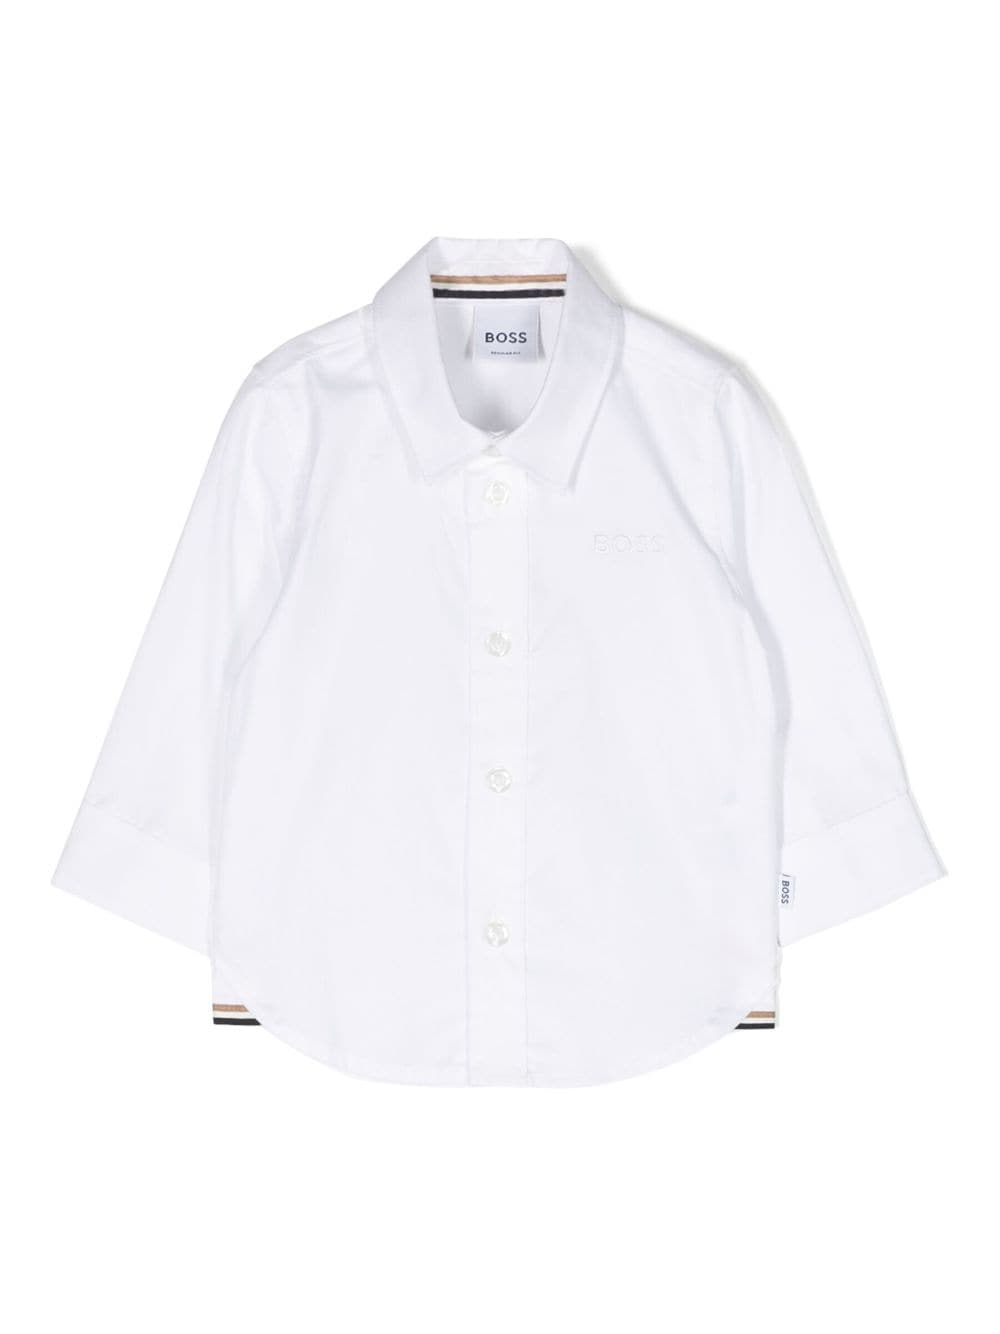 White cotton poplin baby boy HUGO BOSS shirt | Carofiglio Junior